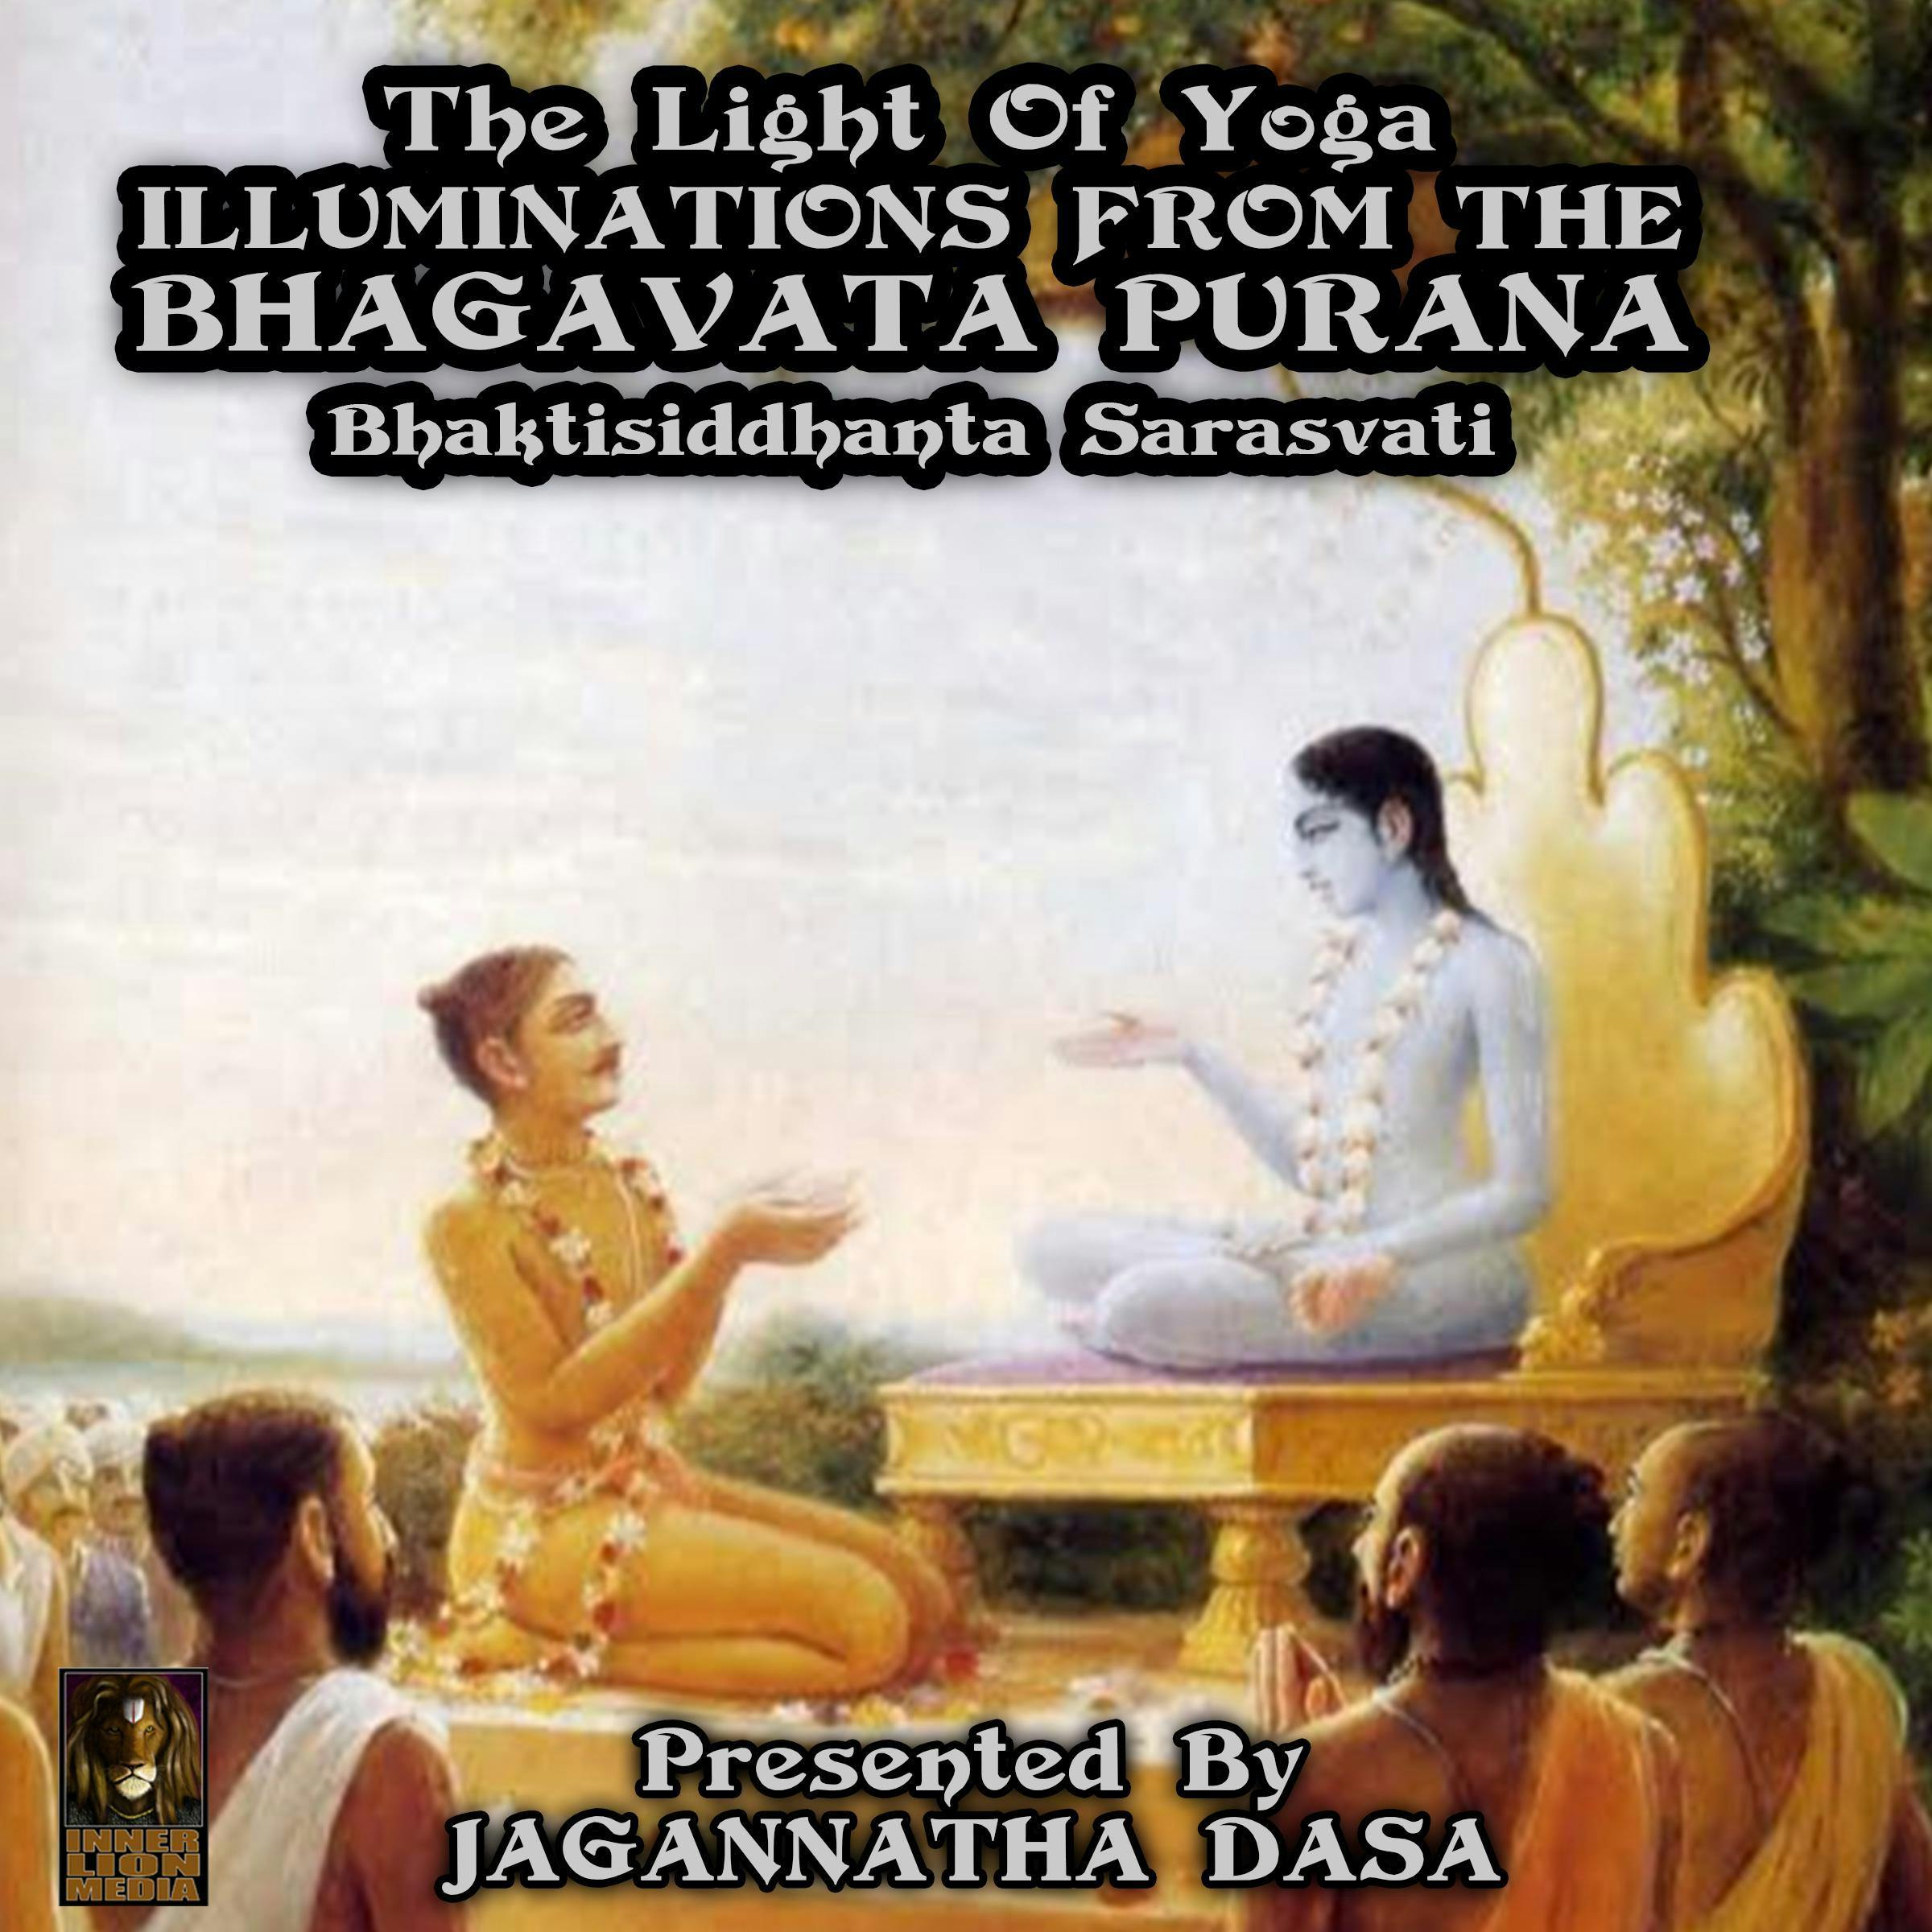 The Light Of Yoga Illuminations From The Bhagavata Purana - Bhaktisiddhanta Sarasvati